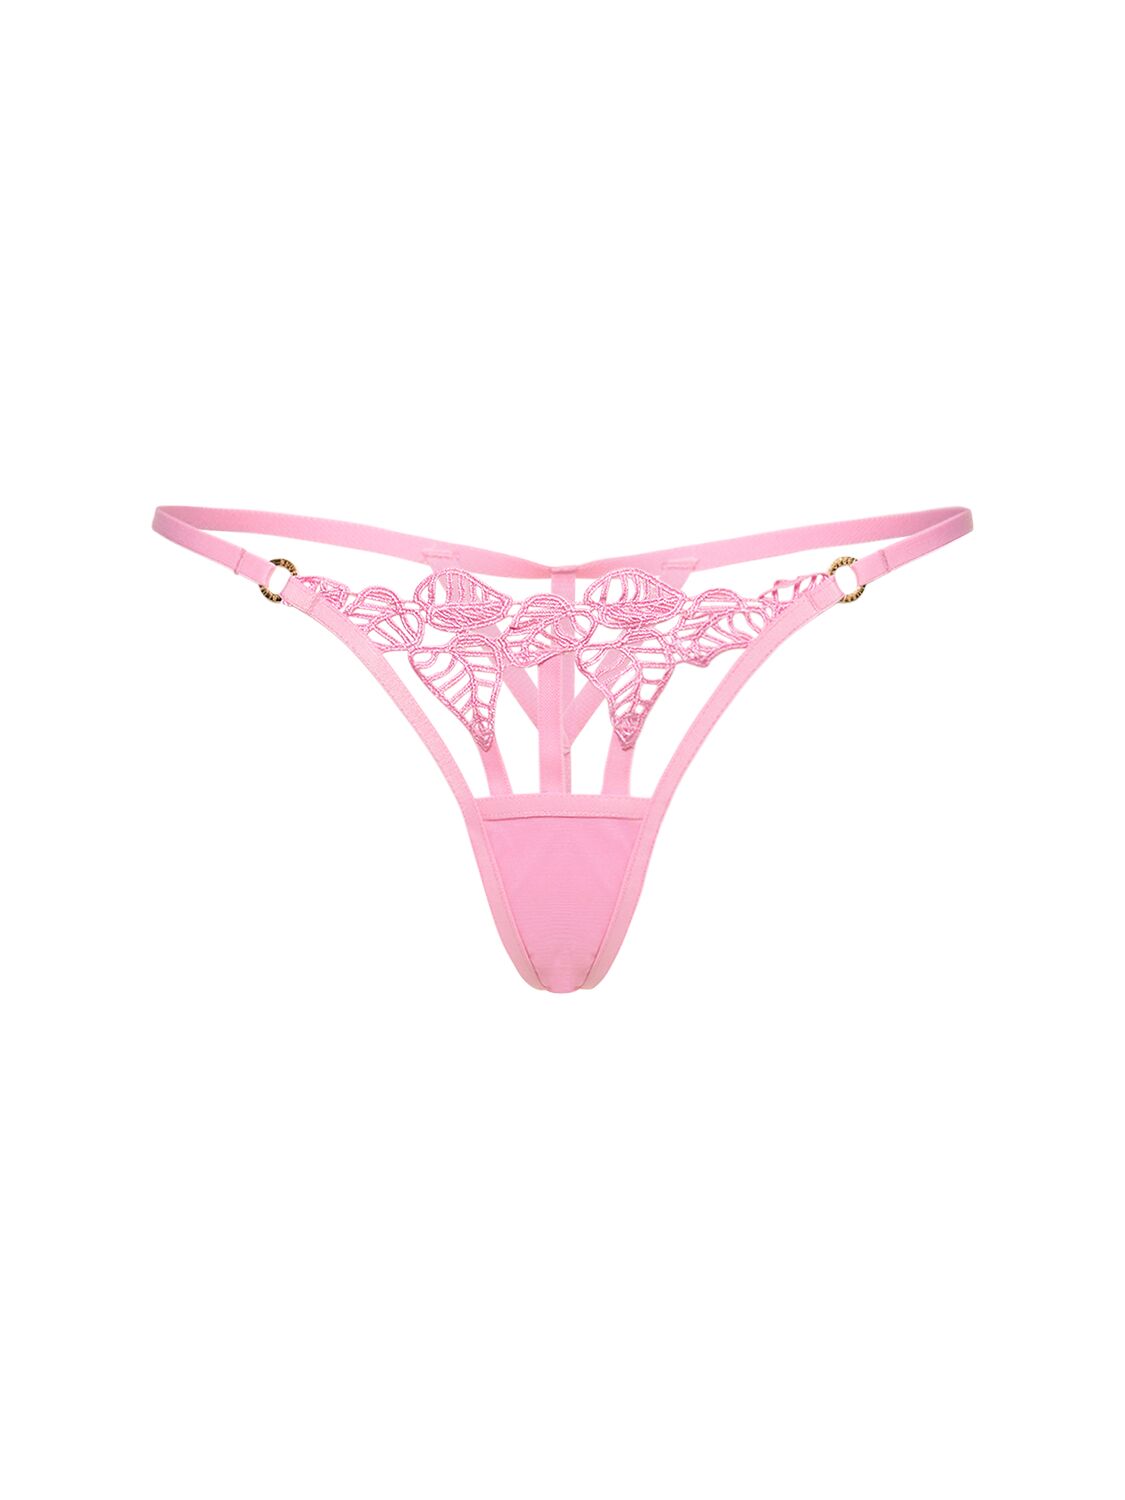 Bluebella Women's Marina Lingerie Thong Underwear, Created for